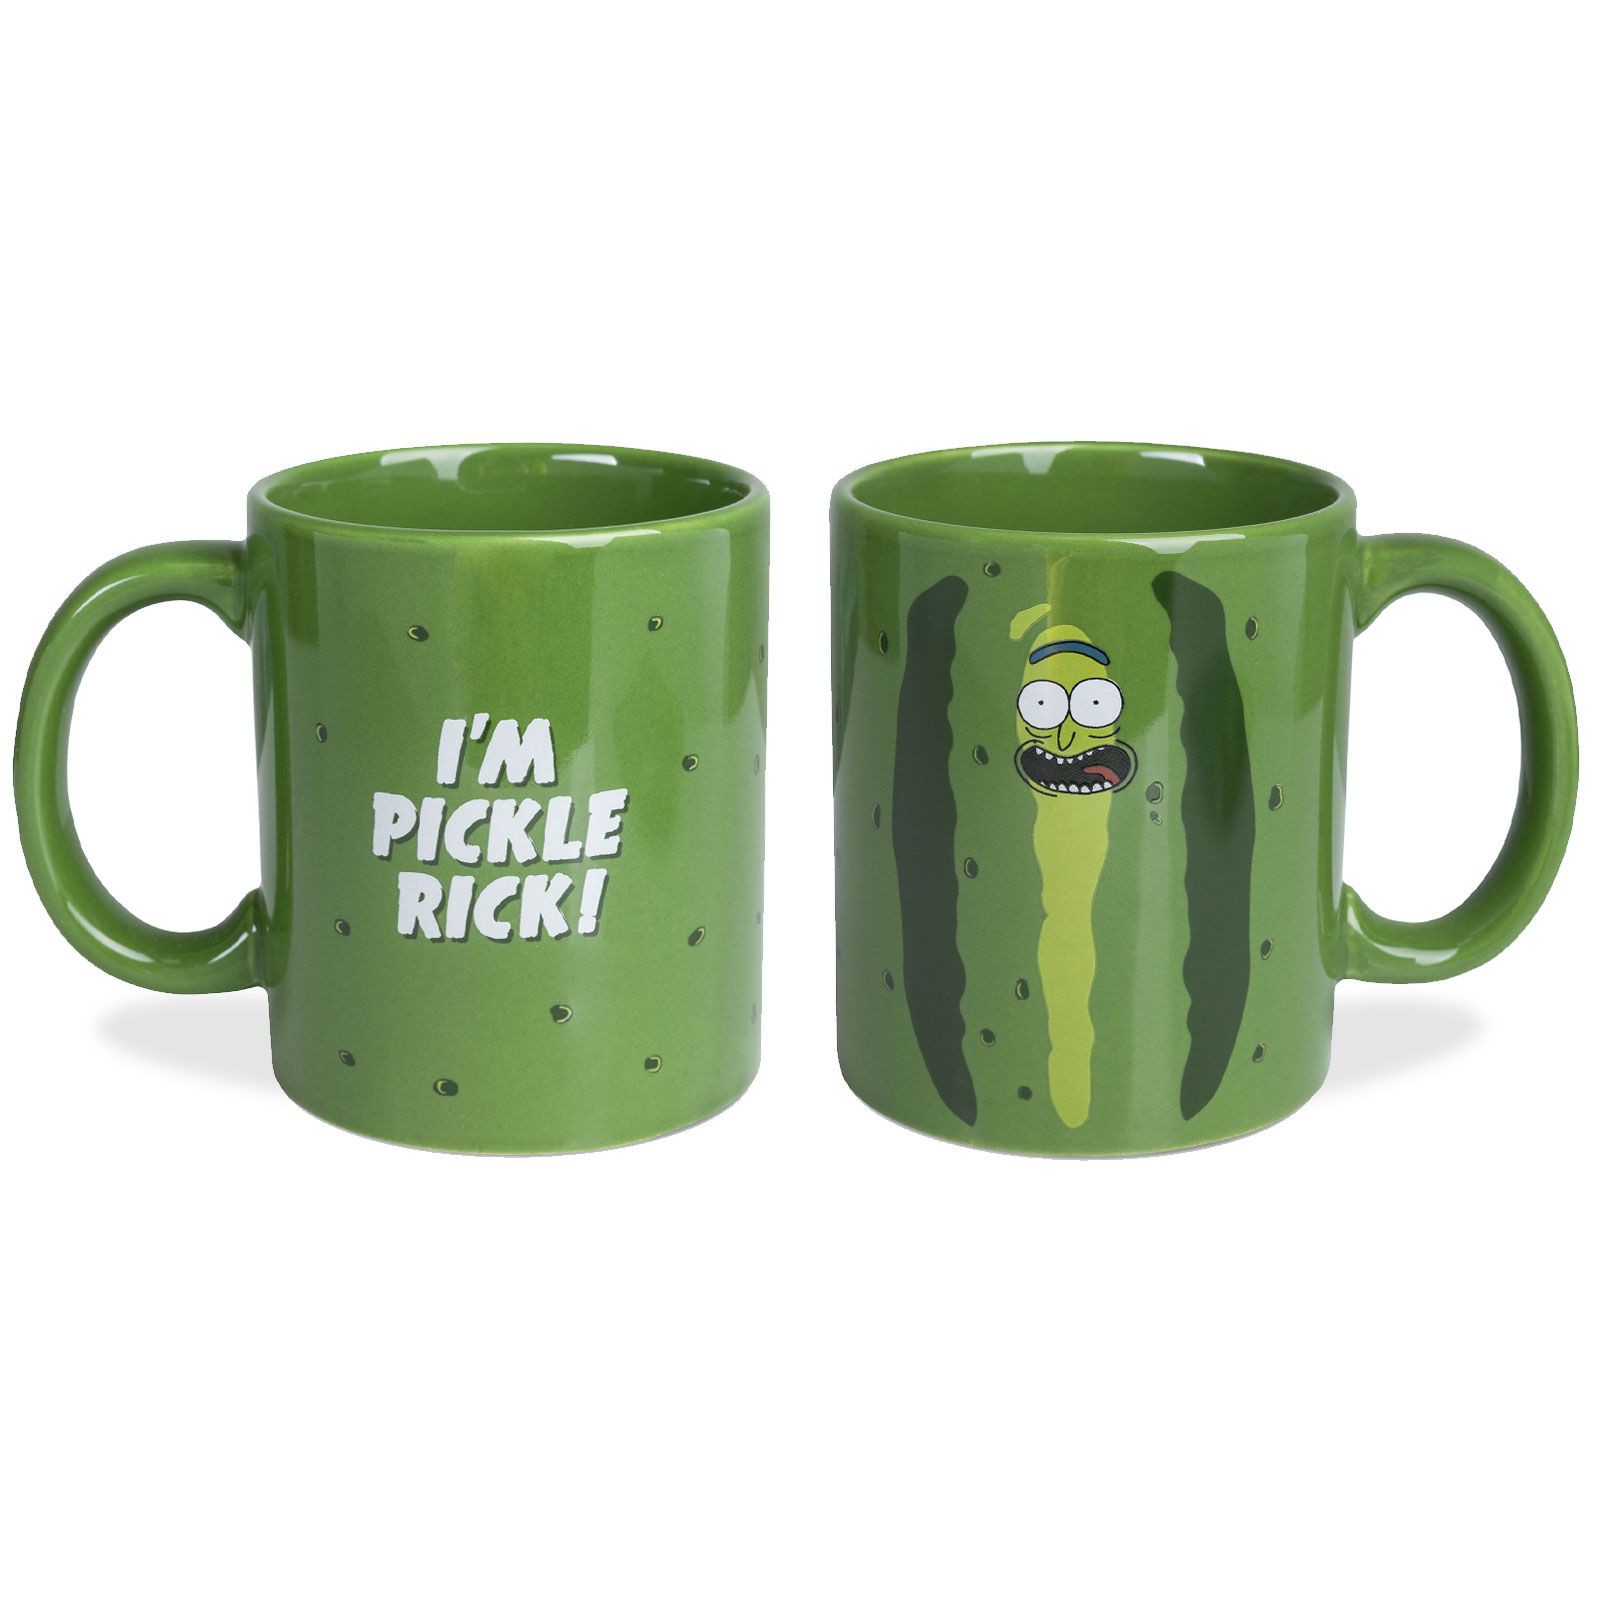 Rick and Morty (Pickle Rick) set